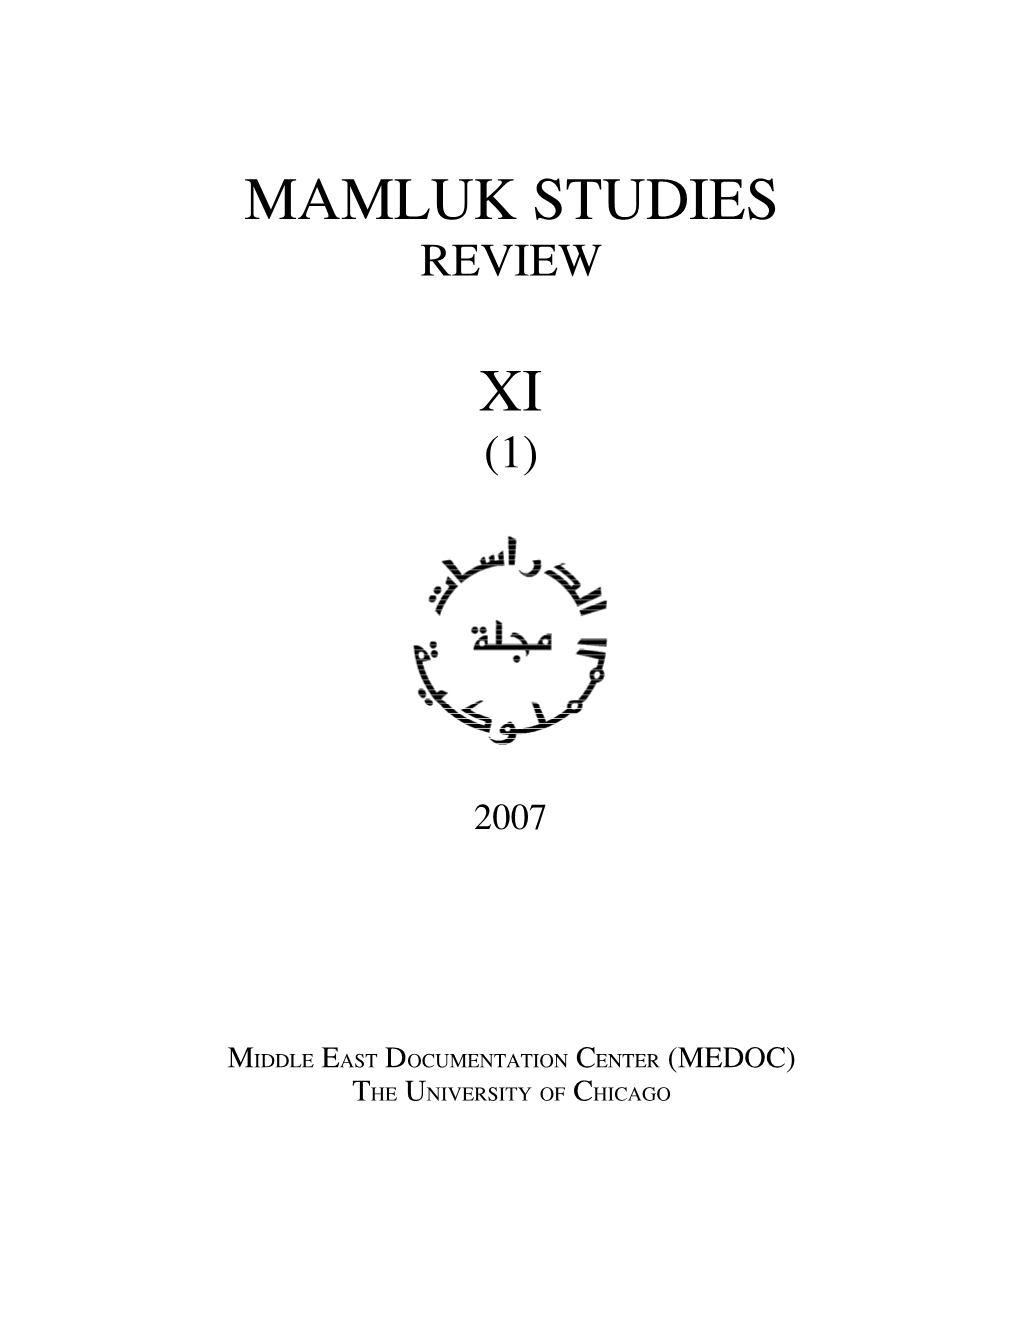 Mamluk Studies Review Vol. XI, No. 1 (2007)